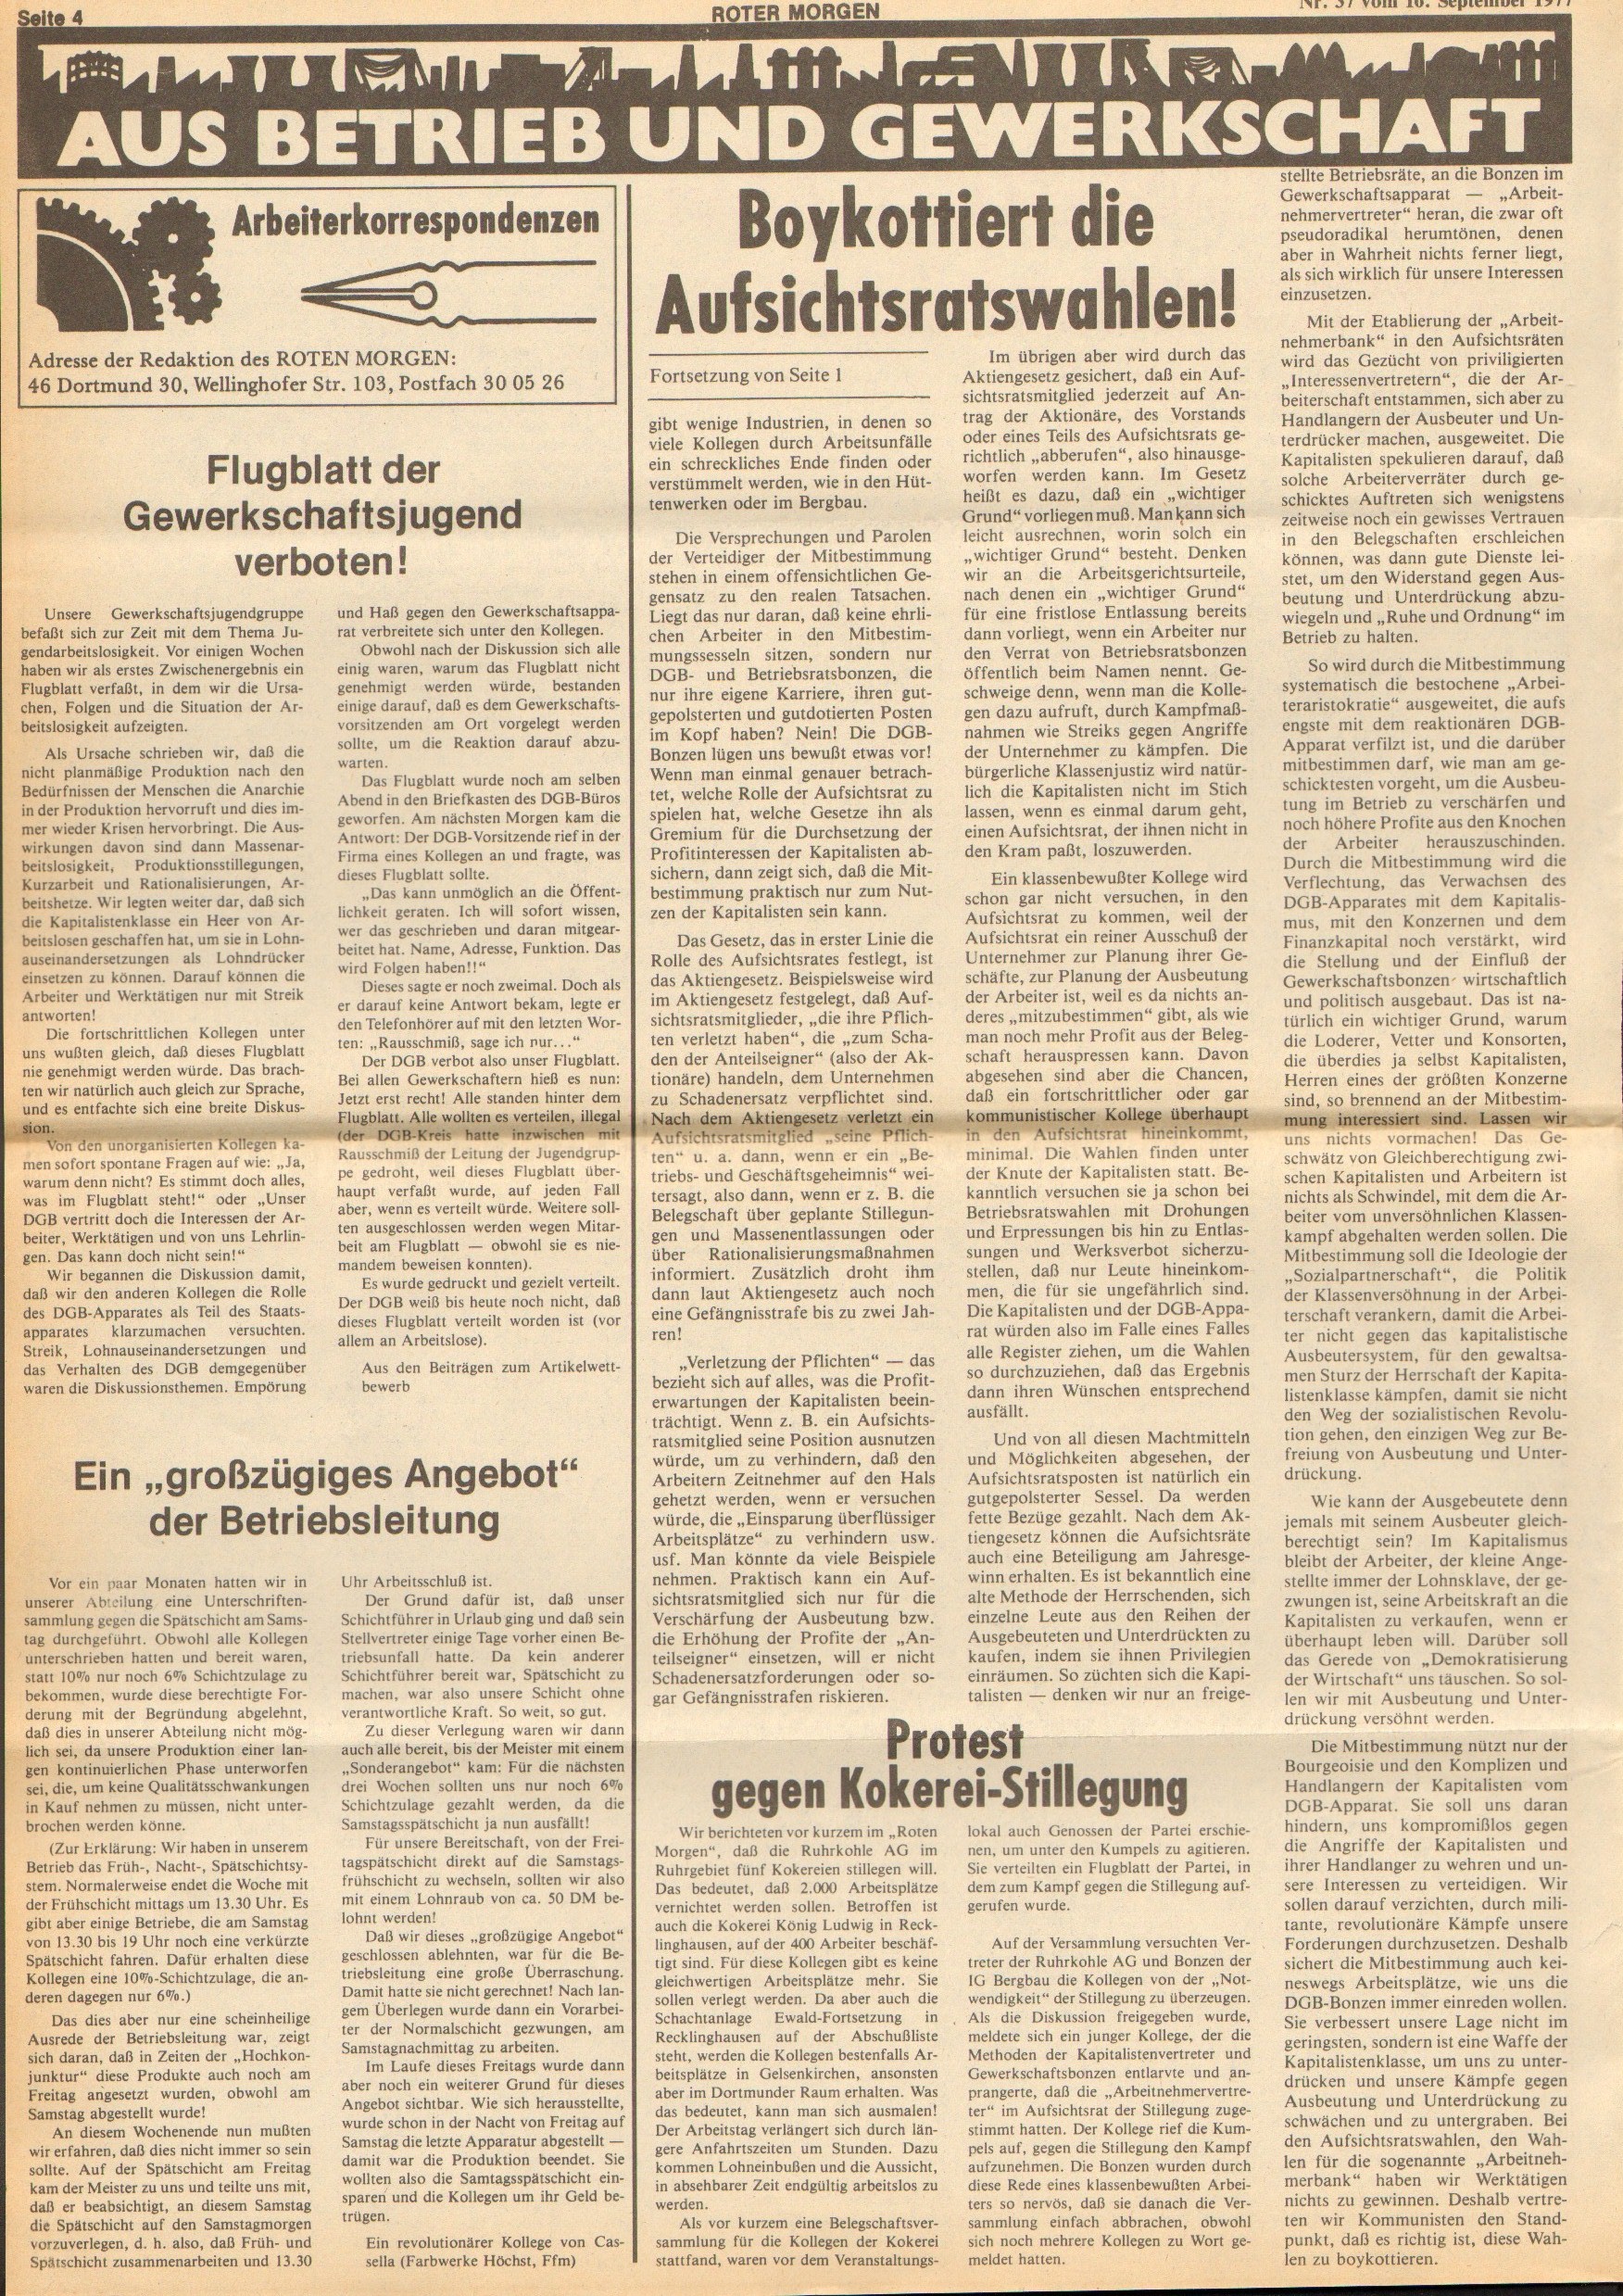 Roter Morgen, 11. Jg., 16. September 1977, Nr. 37, Seite 4